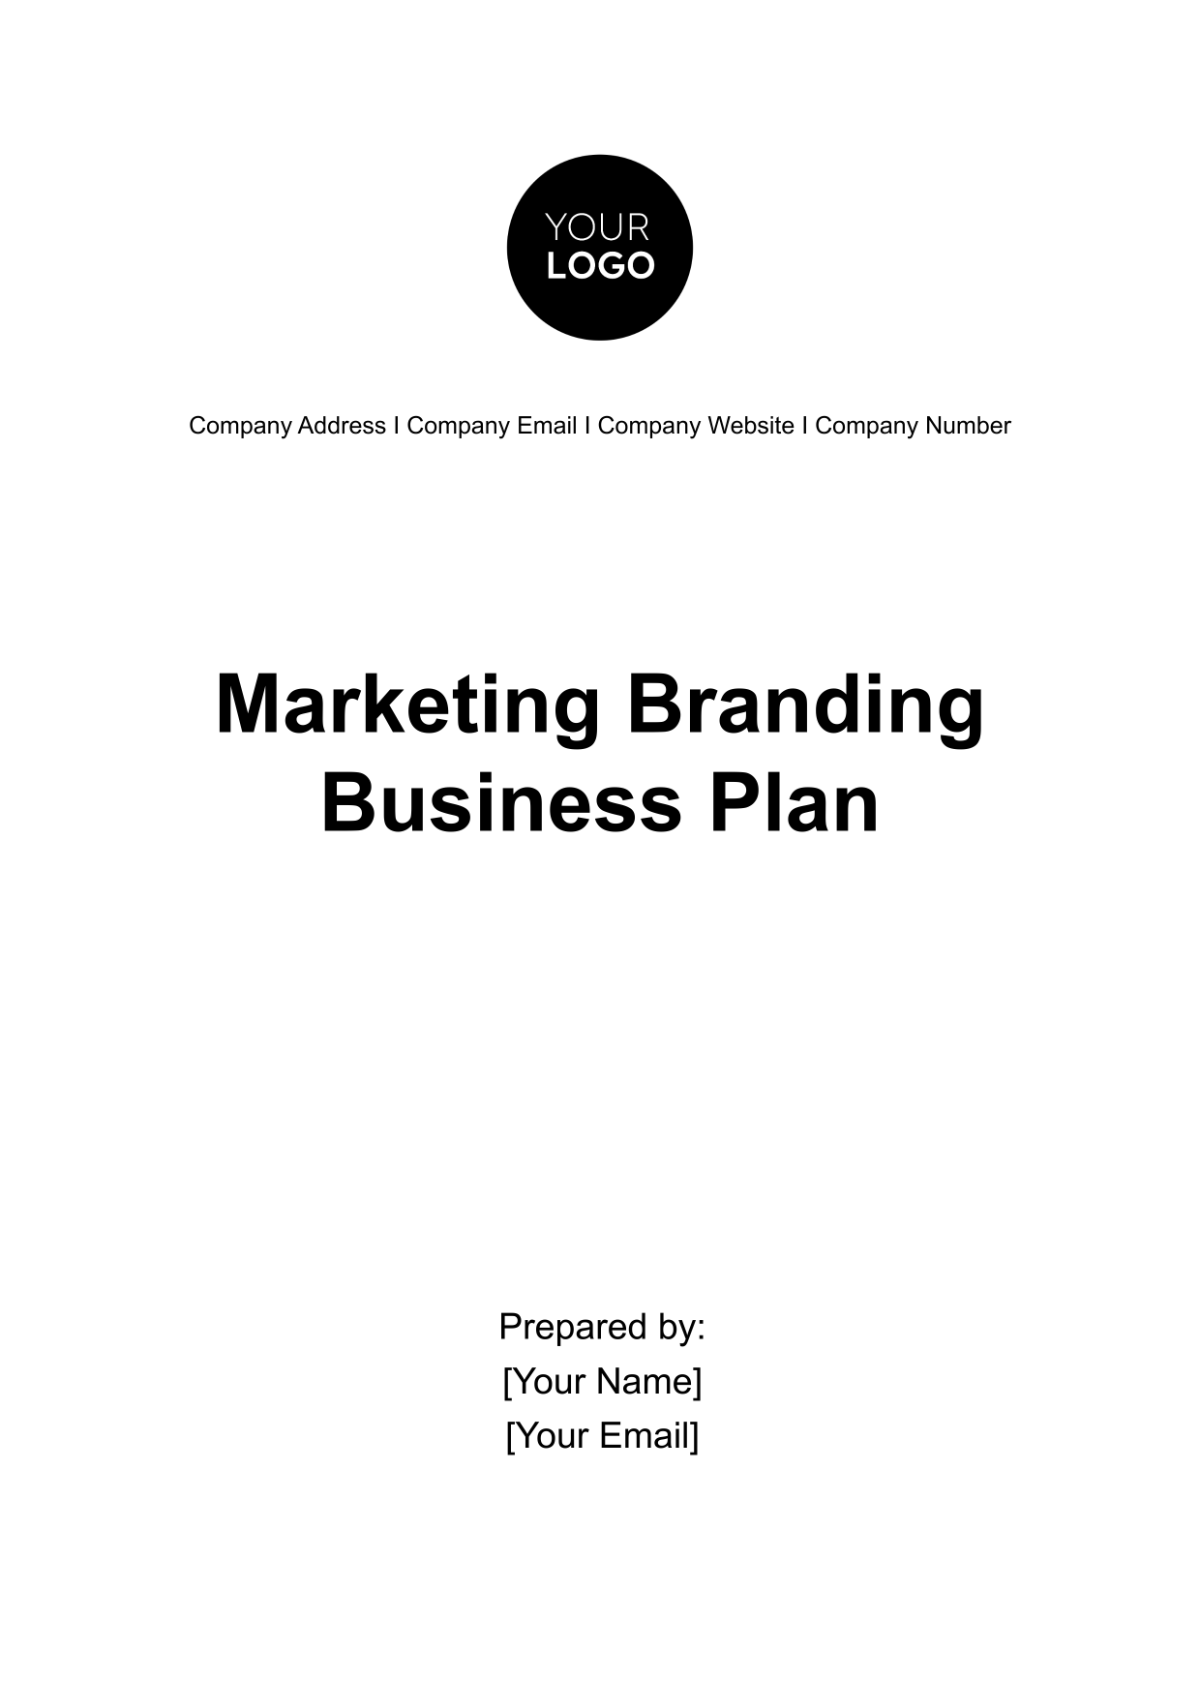 Marketing Branding Business Plan Template